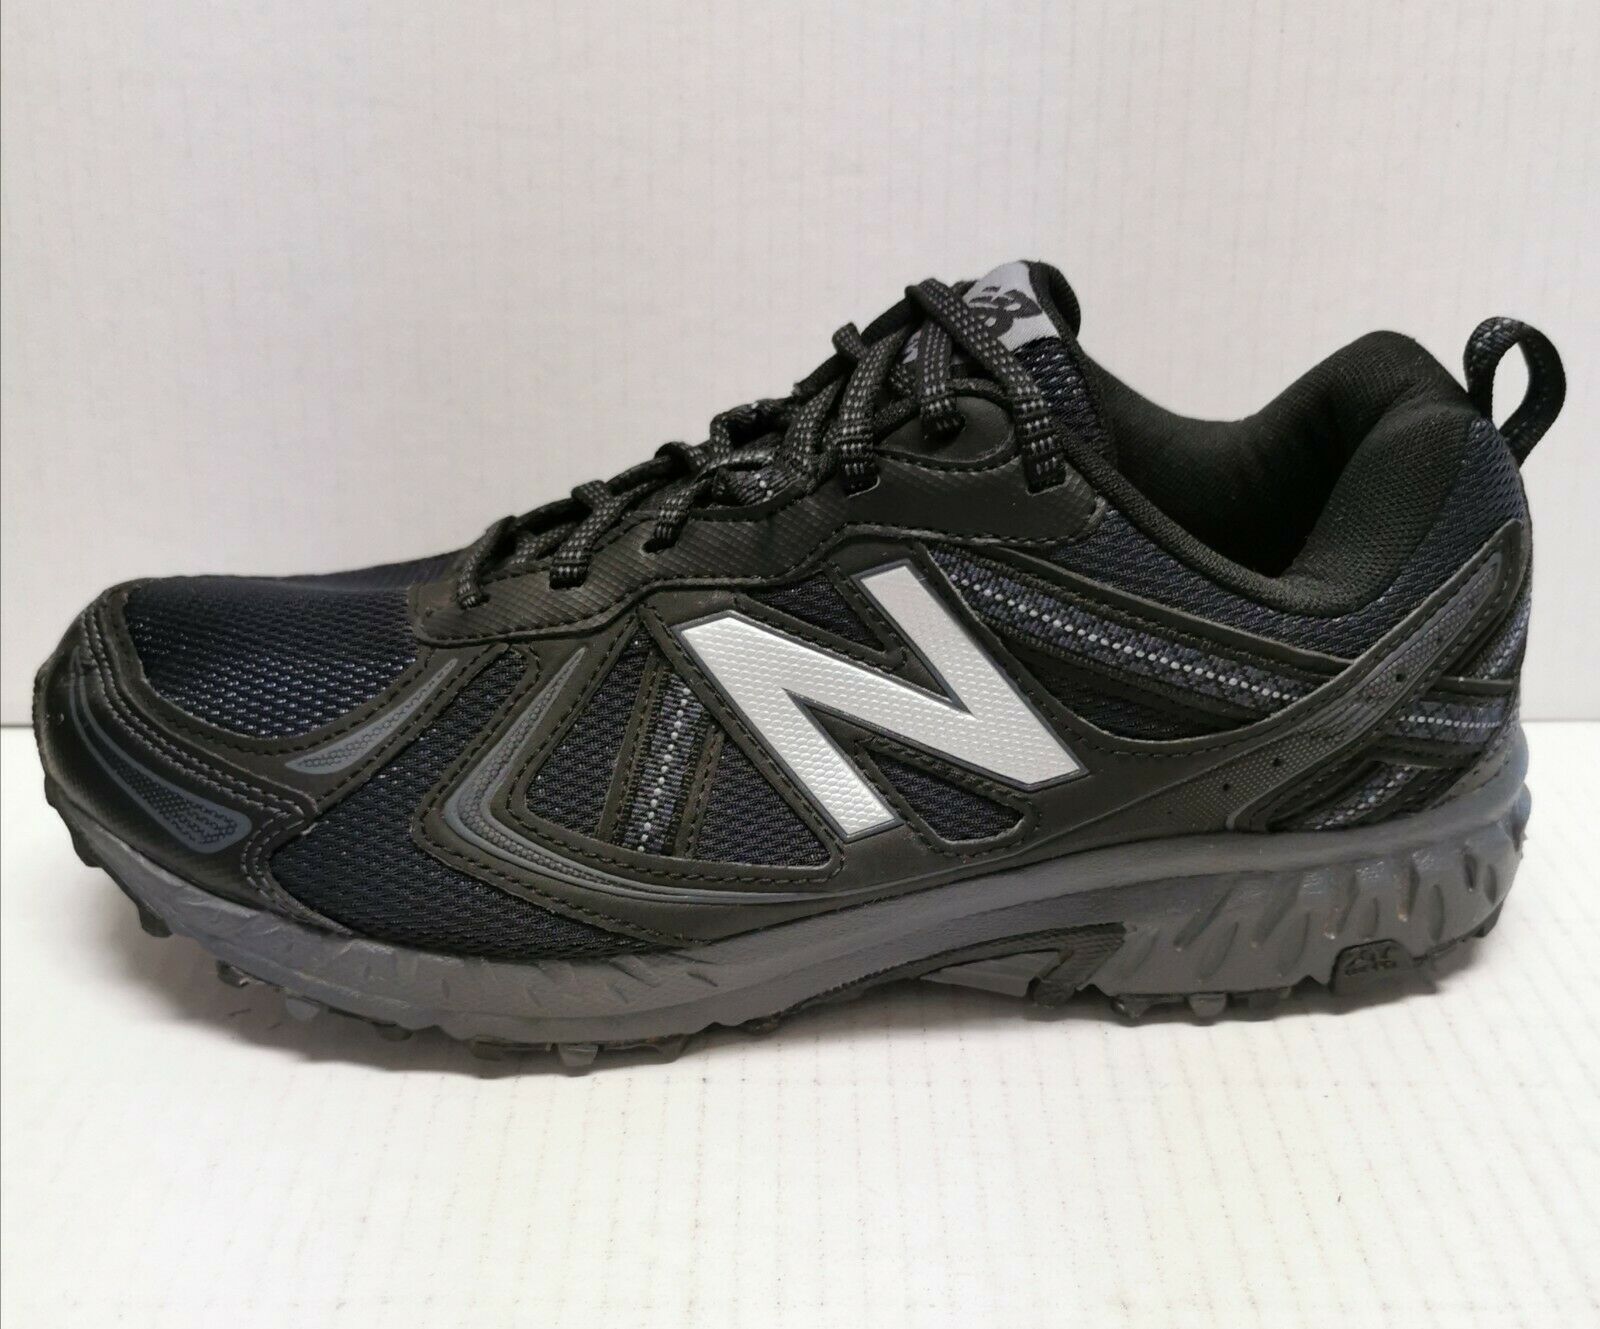 New Balance 410v5 Men's Trail Running Hiking Shoes Size 9 Black/Gray ...